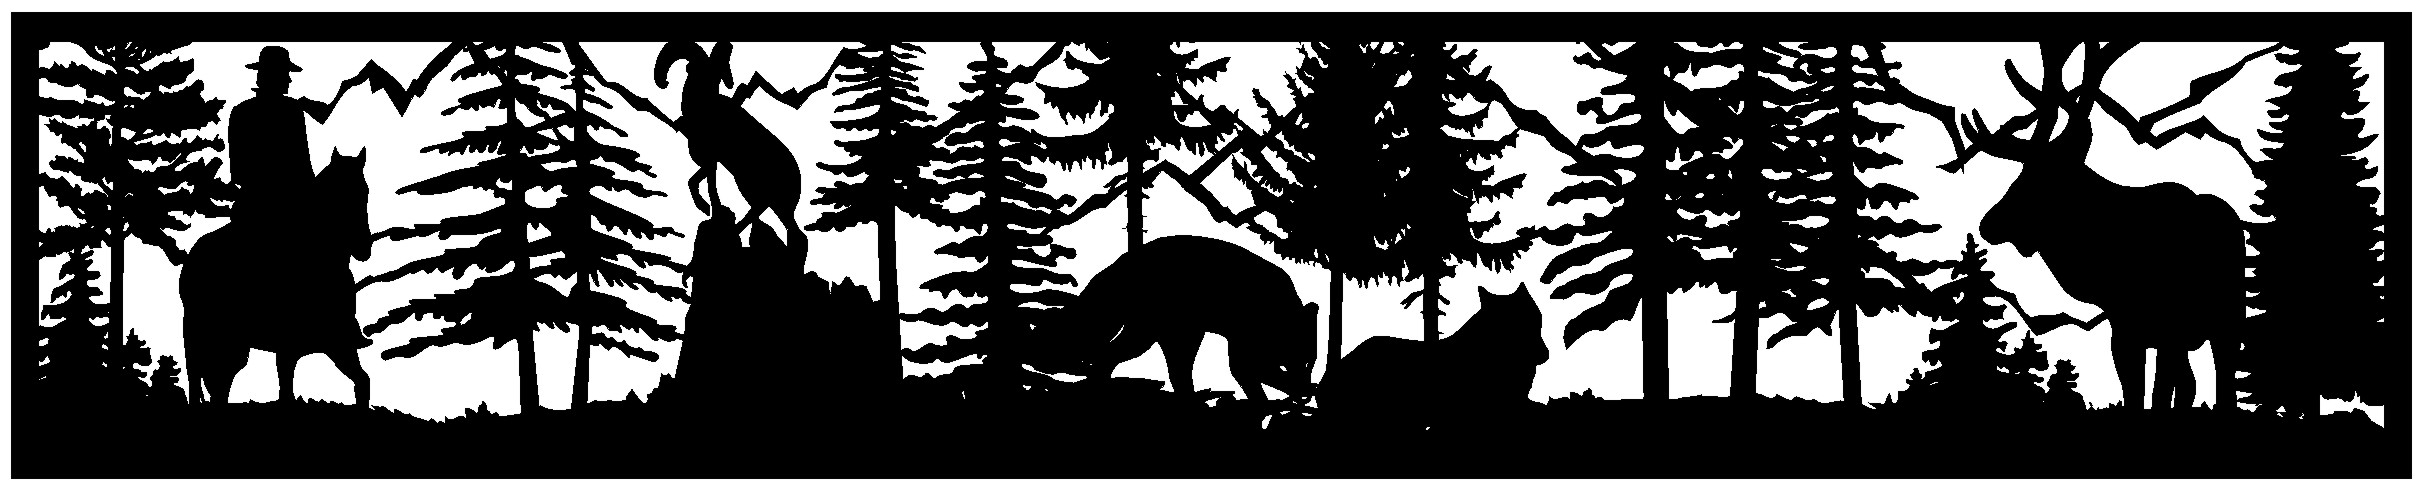 28×144 Horseman Ram Fox Elk Mountains Plasma Art DXF File